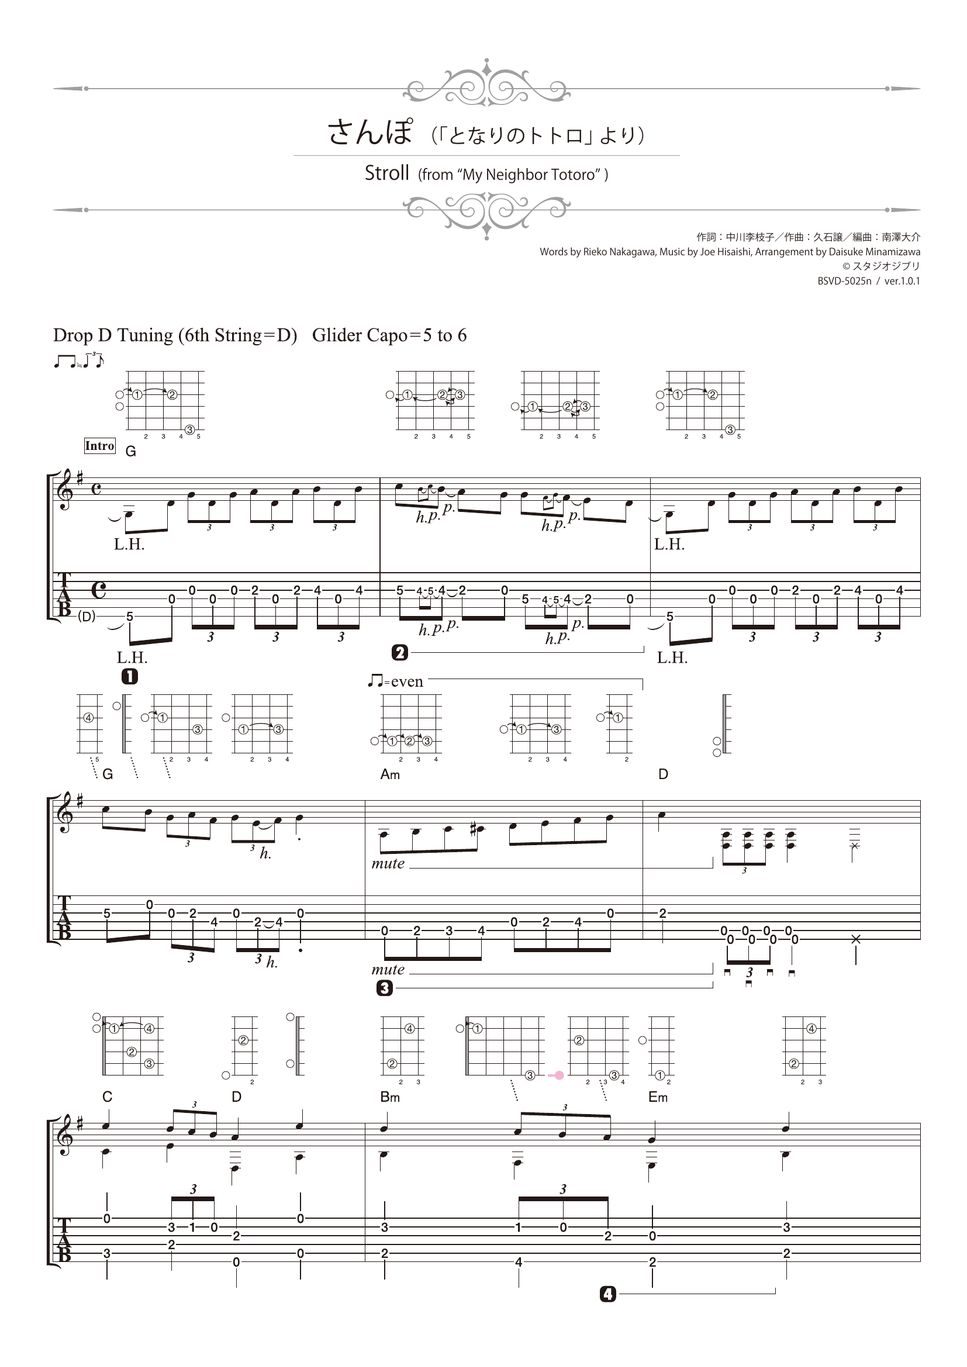 from “My Neighbor Totoro” - Stroll (Solo Guitar) by Daisuke Minamizawa